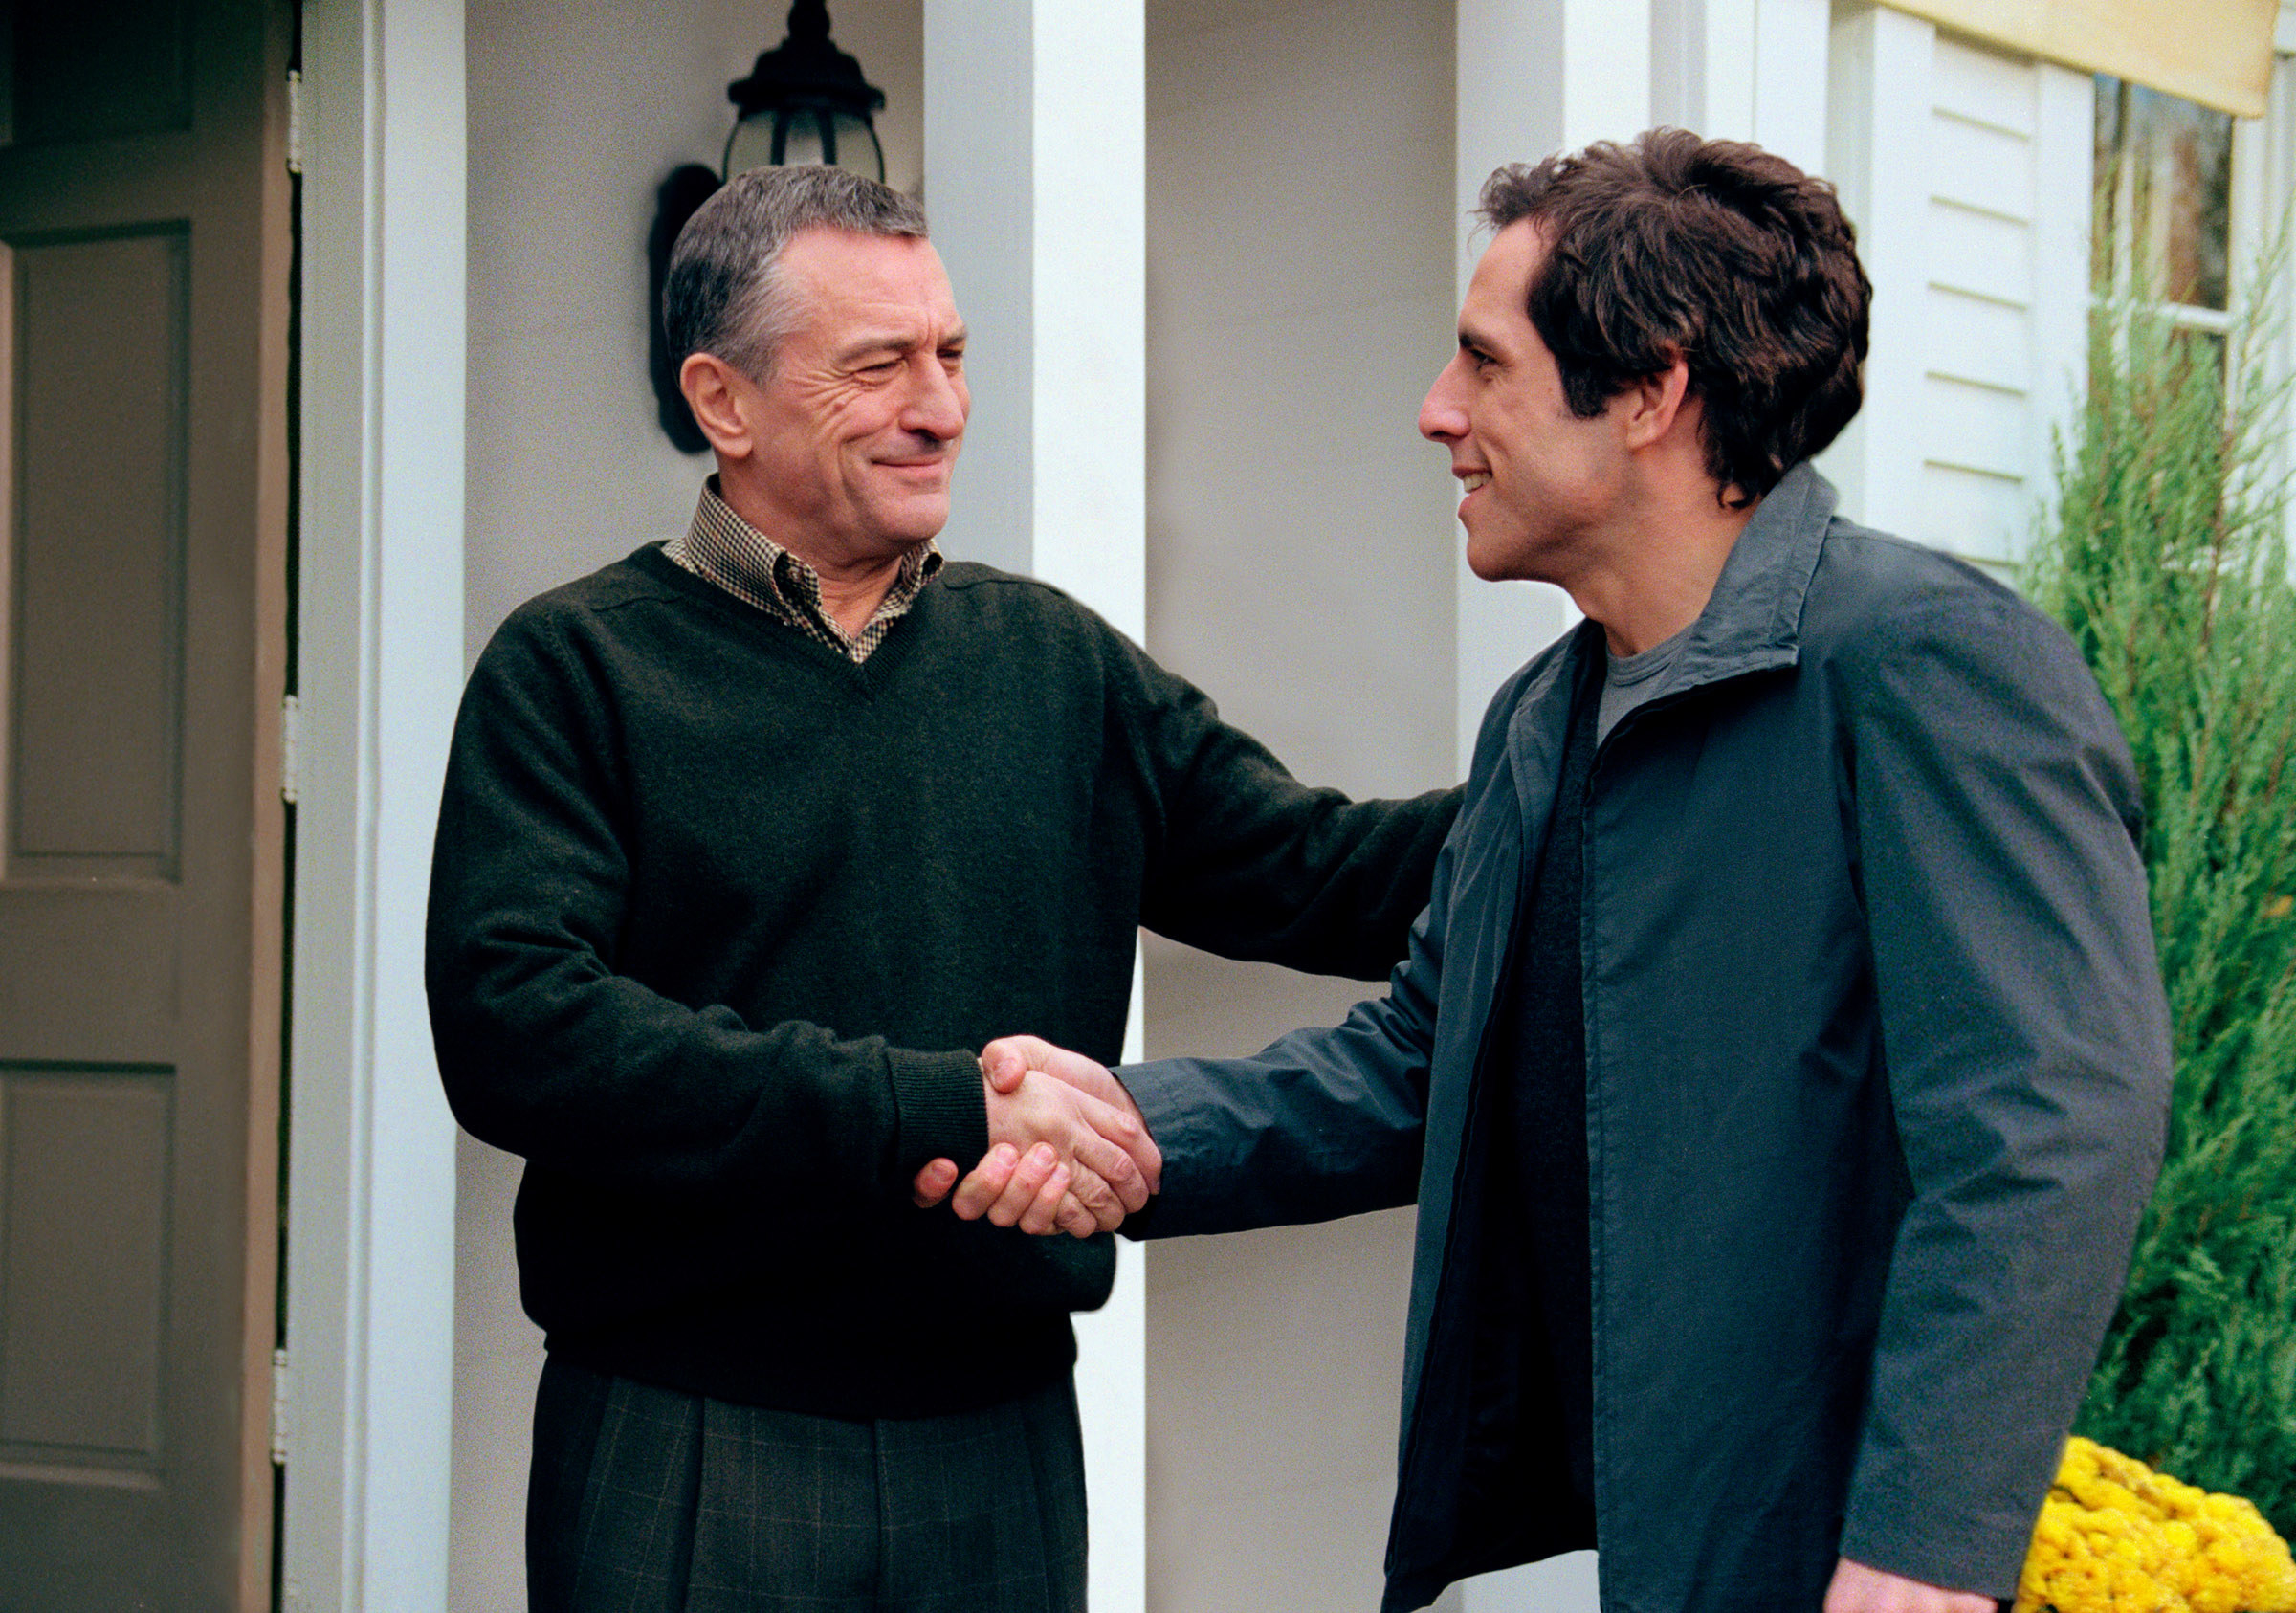 Robert De Niro and Ben Stiller shaking hands